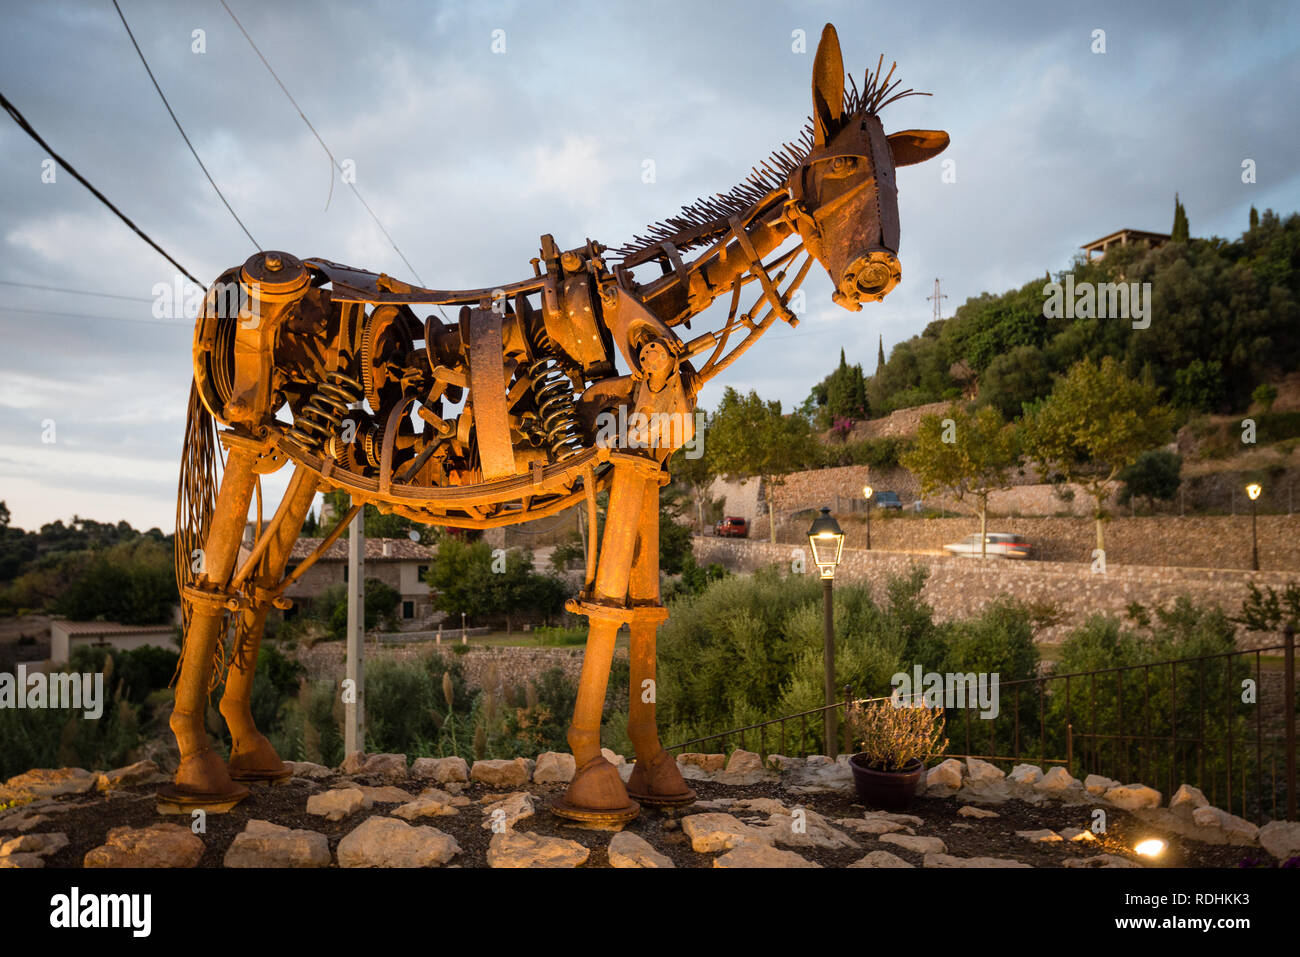 ESTELLENCS, SPAIN - OCT 5, 2018:  Scrap metal sculpture arts - a figure of a horse made out of trash in village Estellencs, Mallorca island, Spain Stock Photo